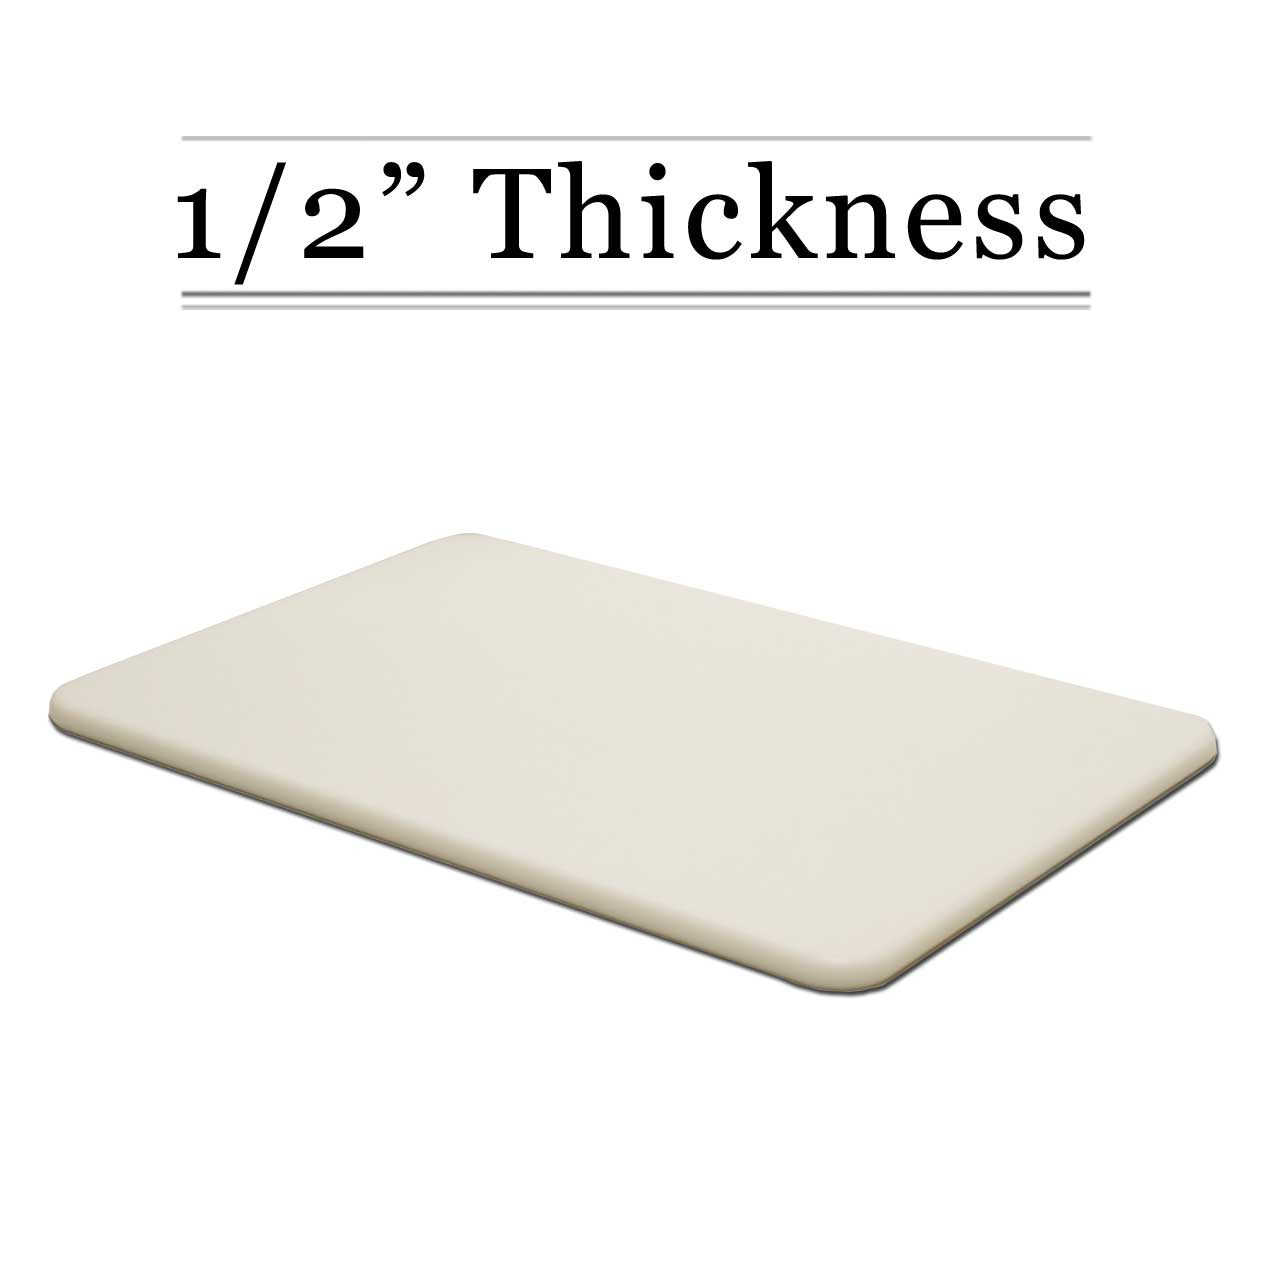 1/2 Thick White Custom Cutting Board